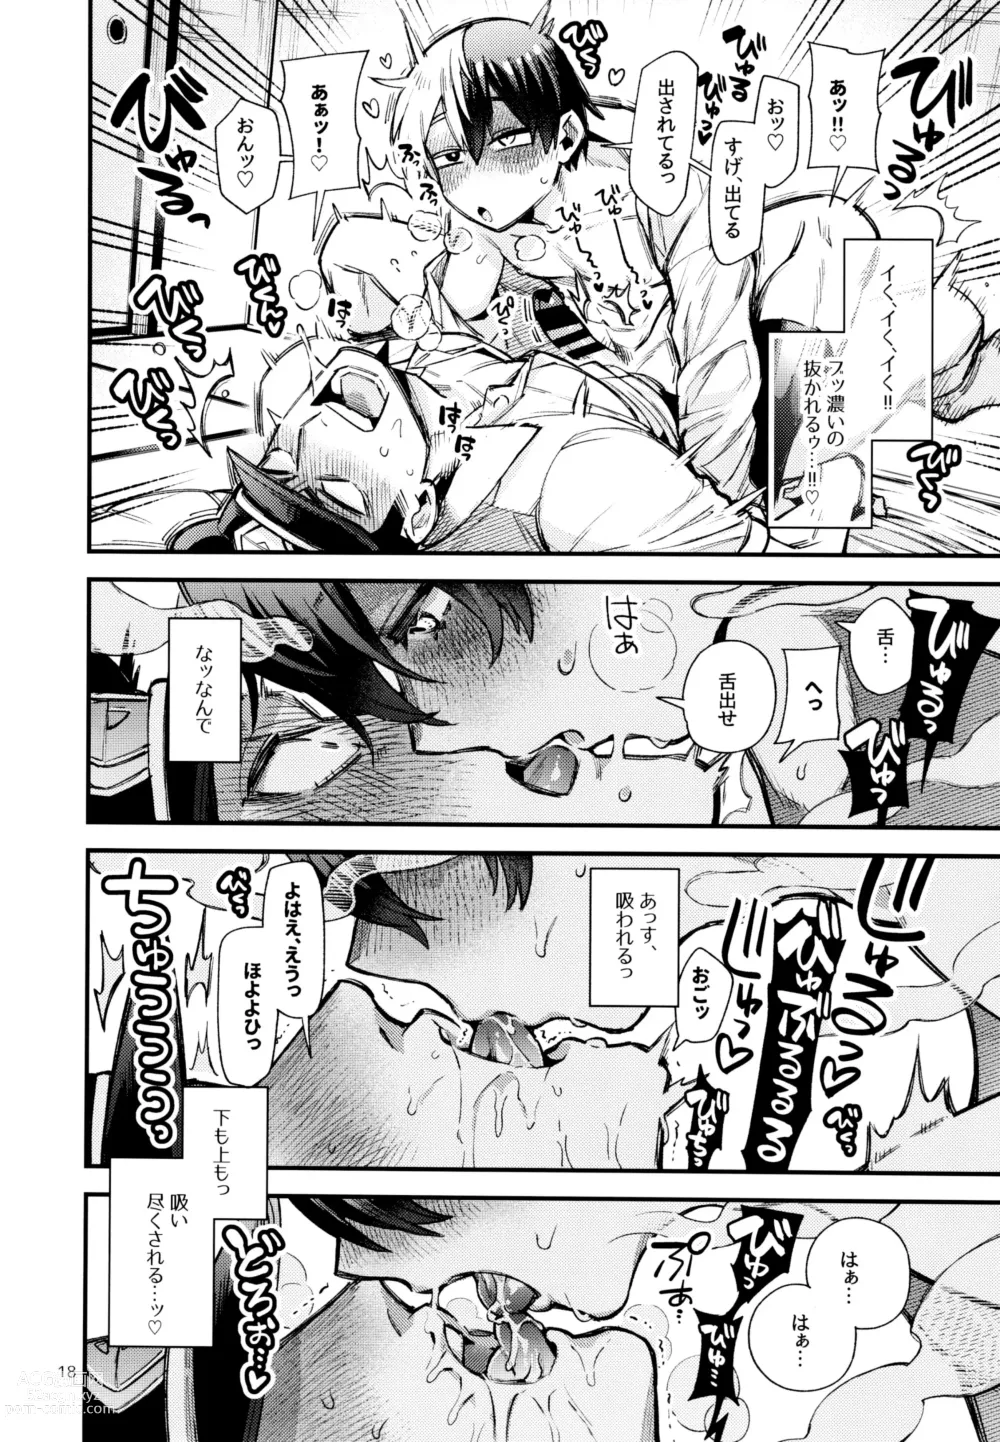 Page 18 of doujinshi Ijimenuki!